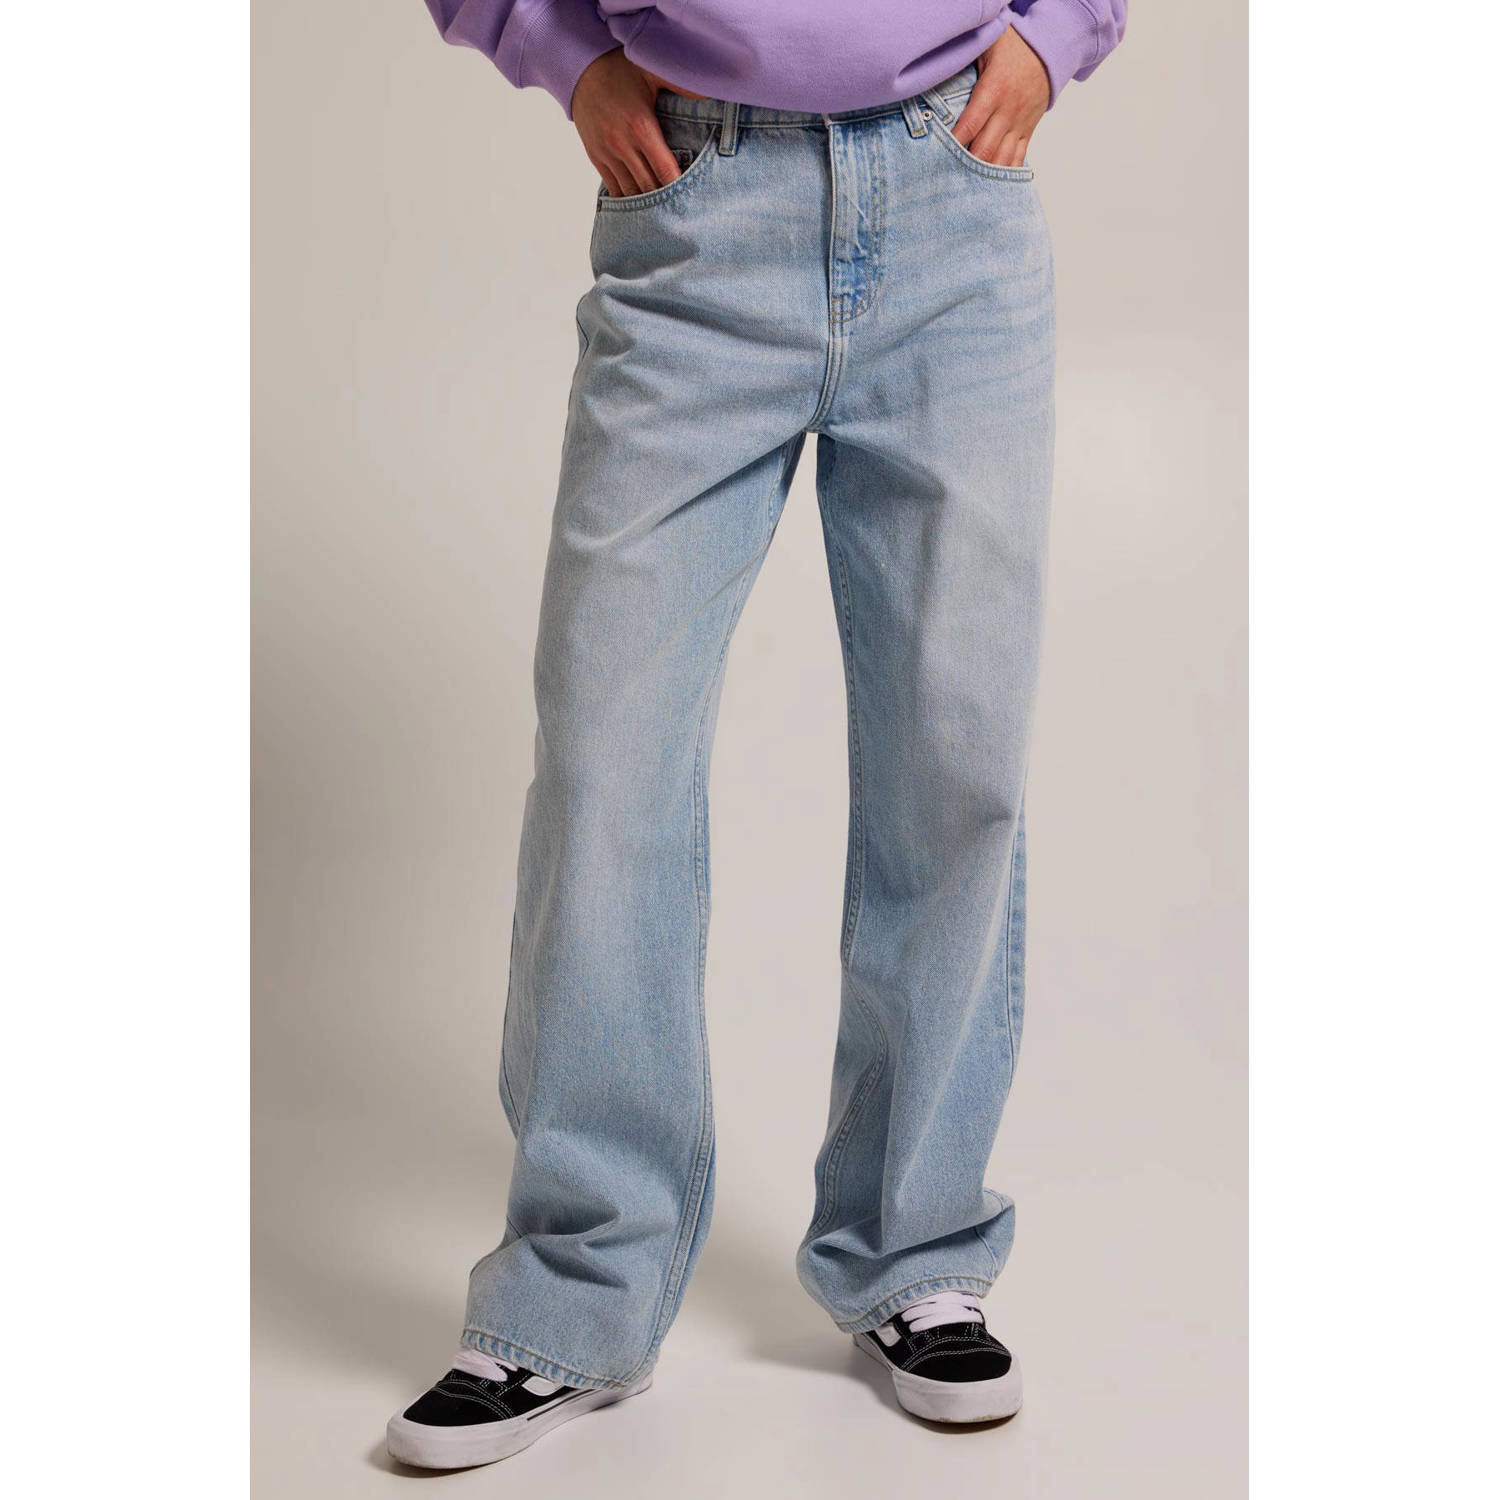 America Today high waist straight jeans Irvine light blue denim